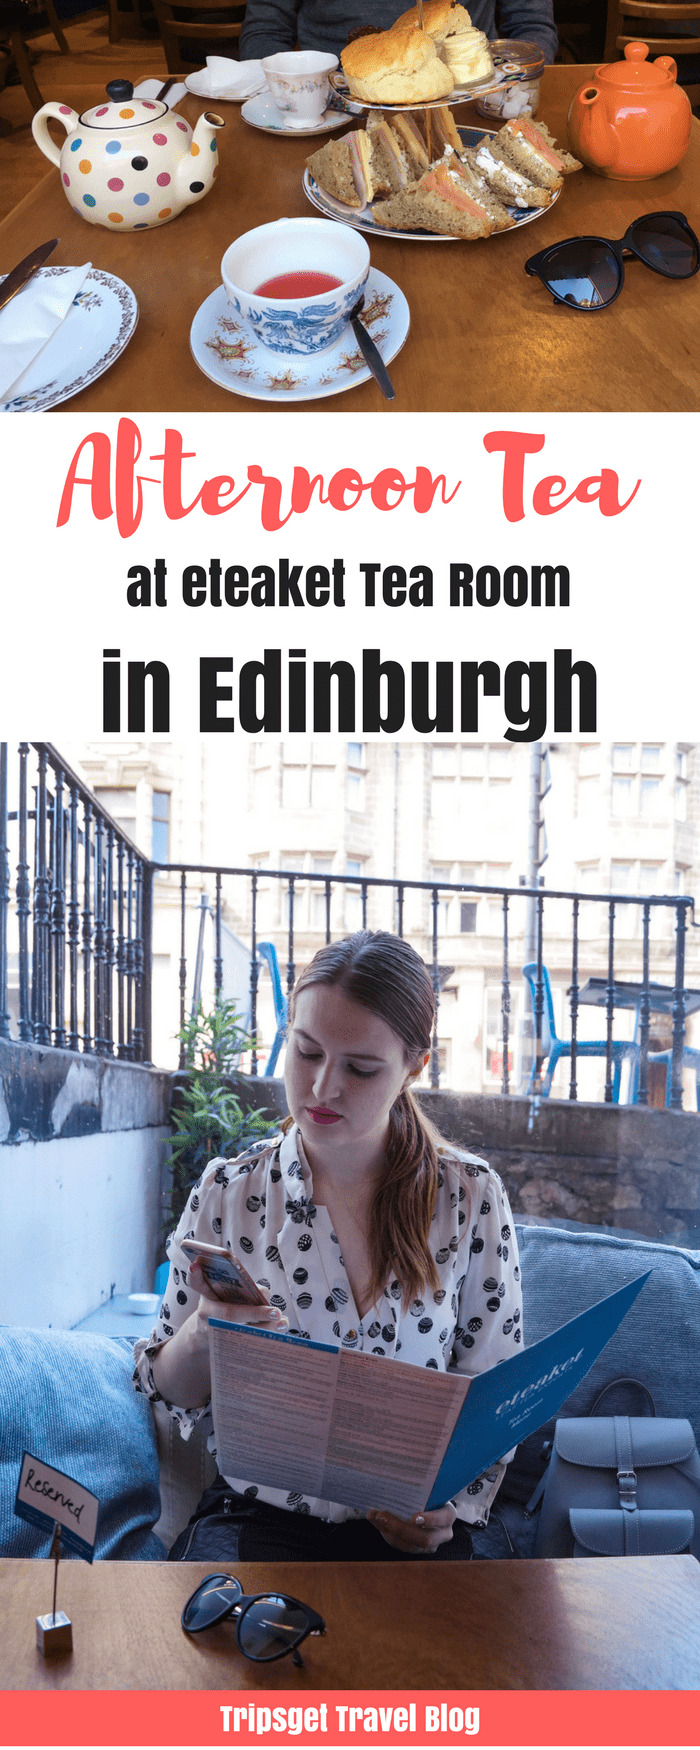 Great Afternoon Tea in Edinburgh - eteaket tea room